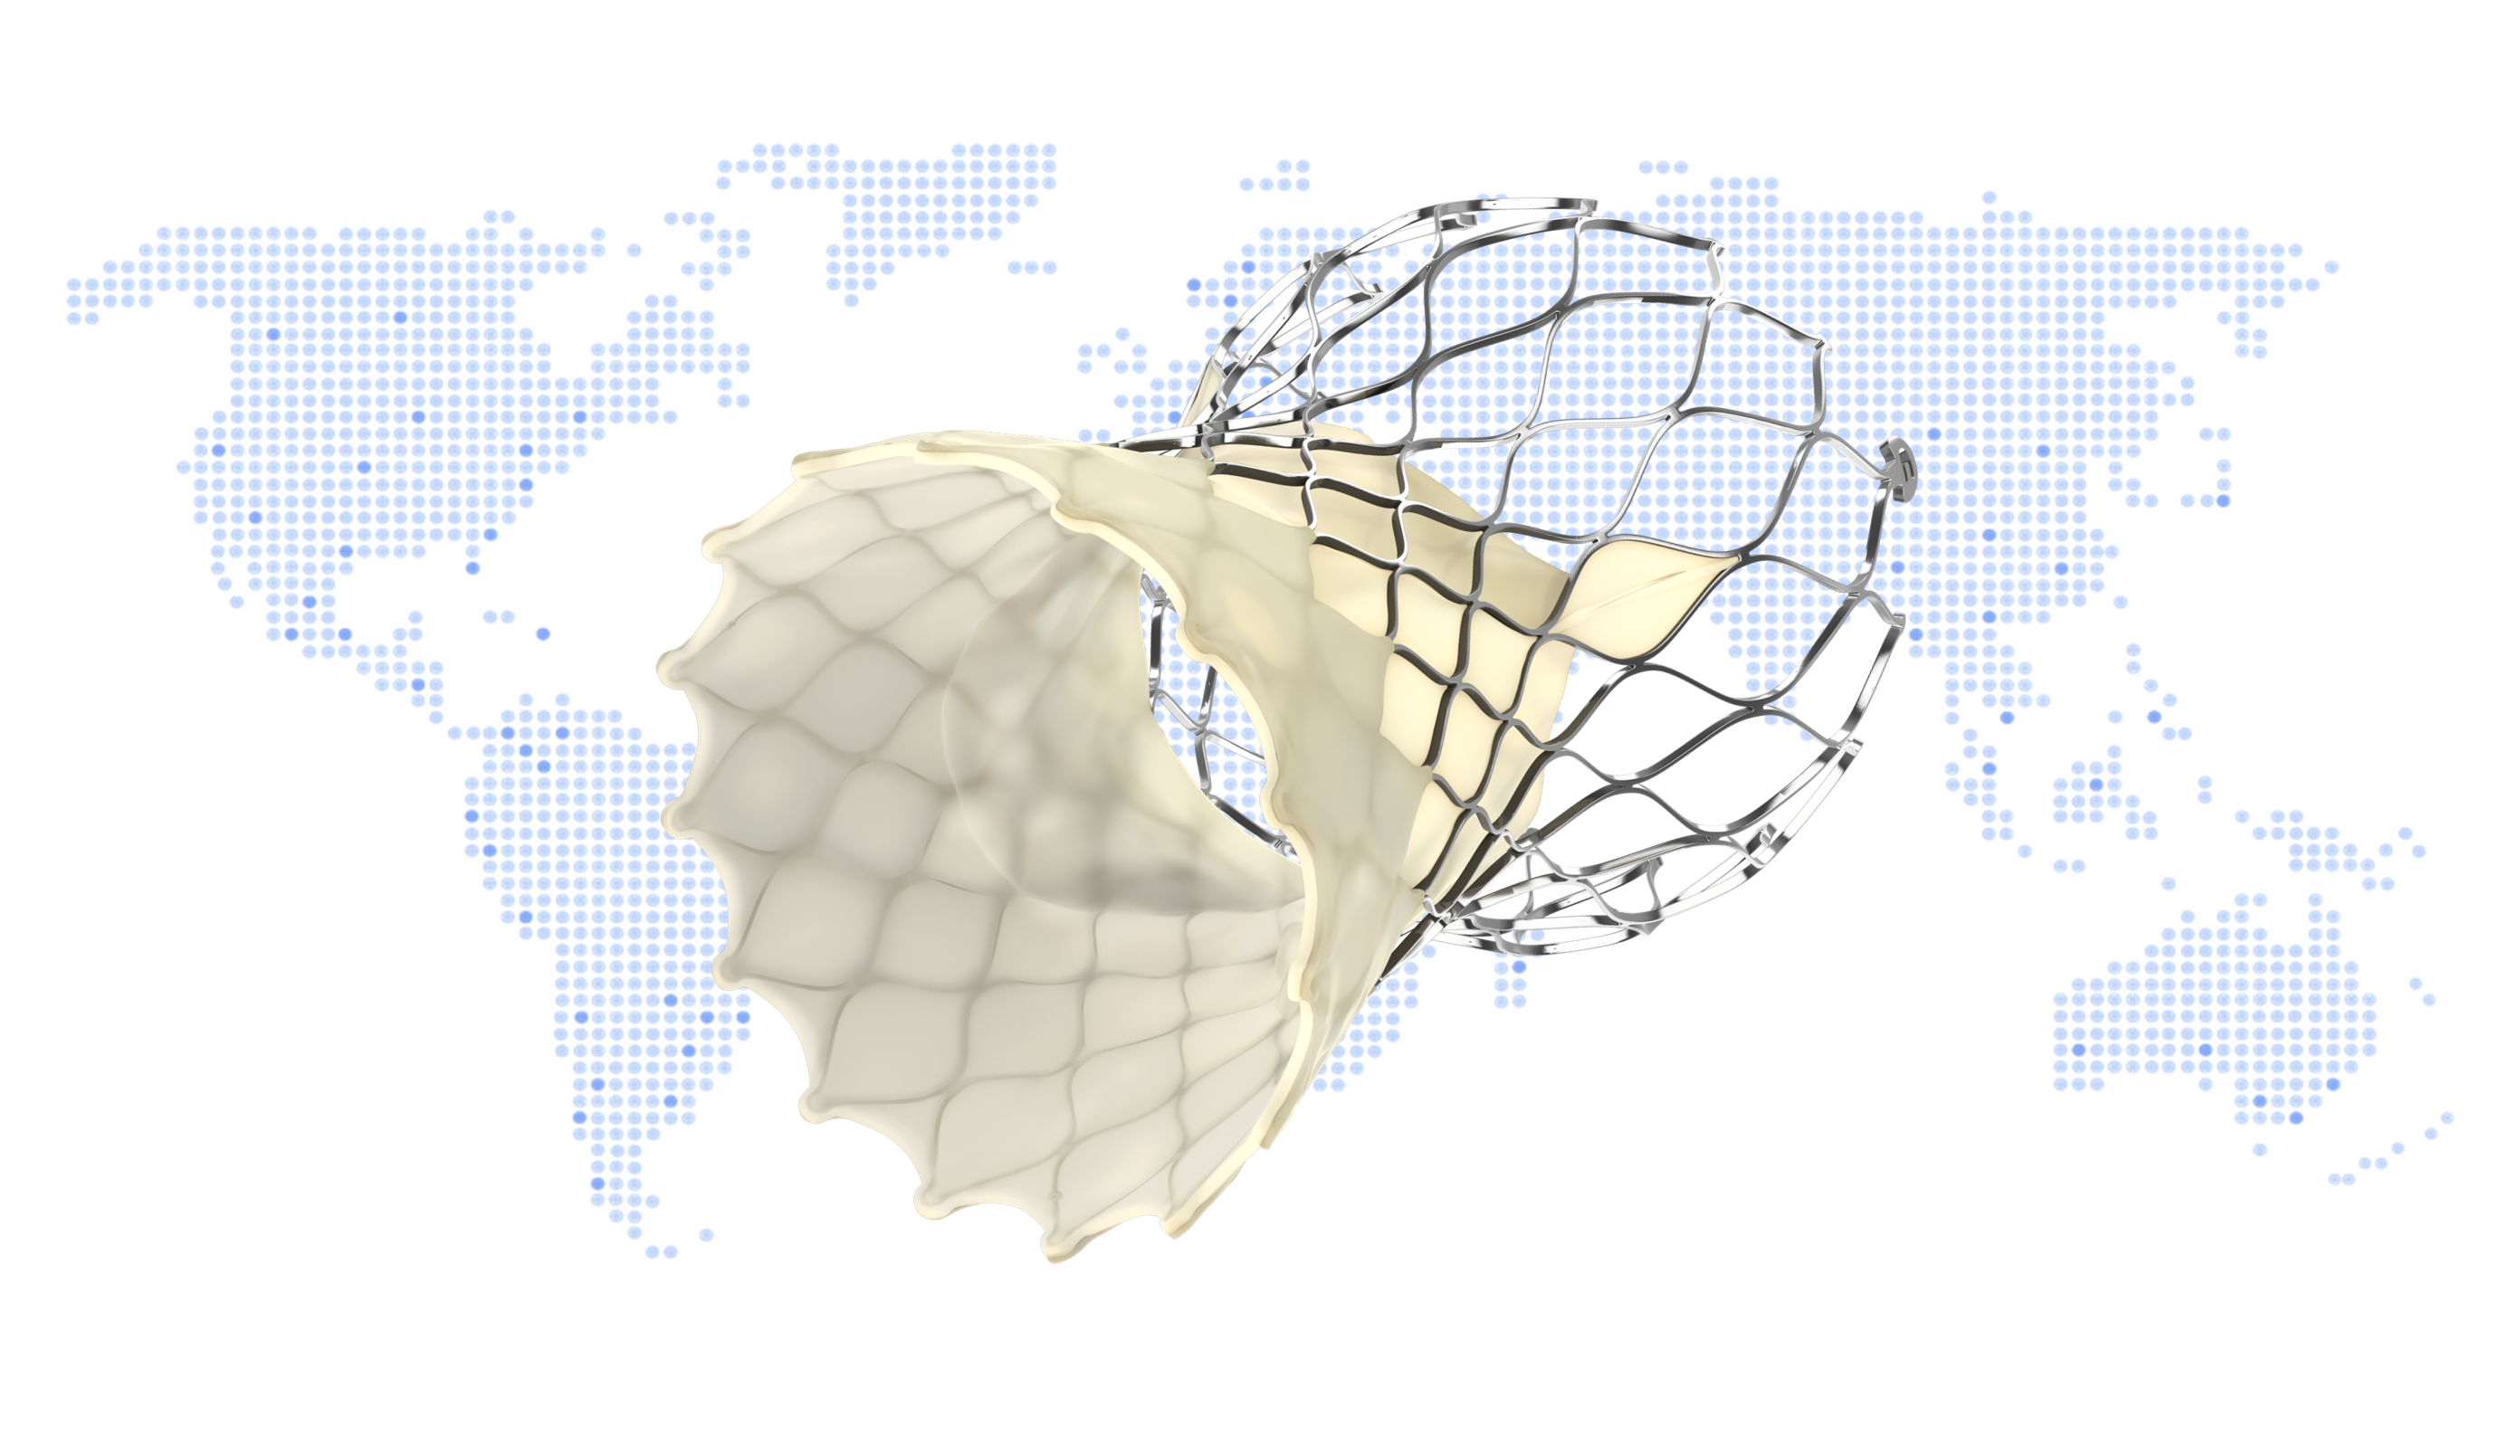 Img - globe with Evolut valve